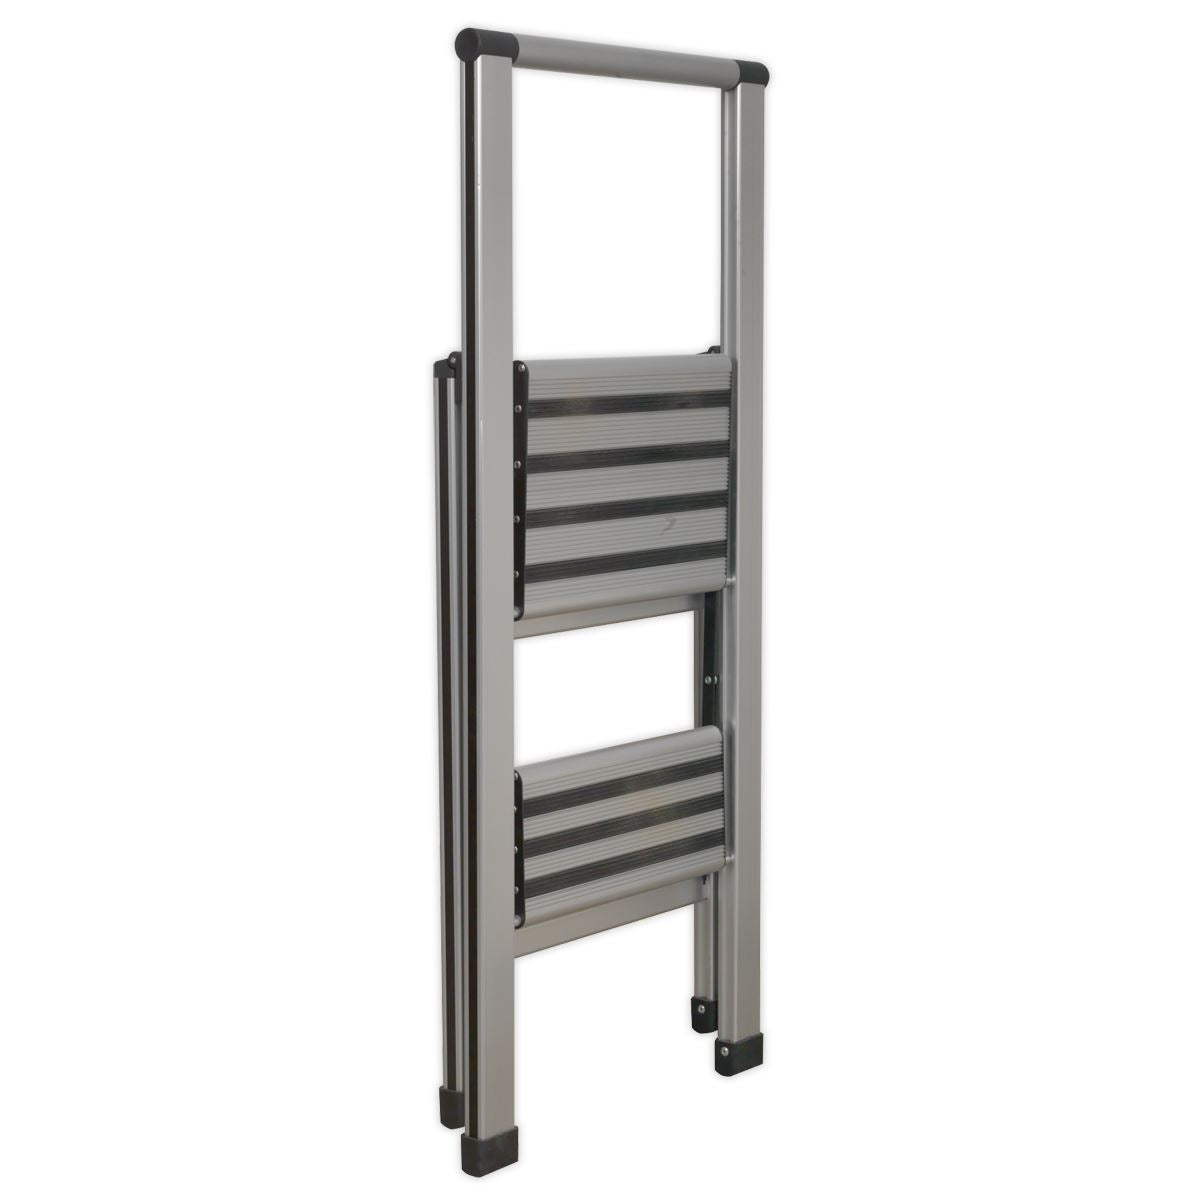 Sealey Aluminium Prof Folding Step Ladder 2-Step 150kg Capacity APSL2